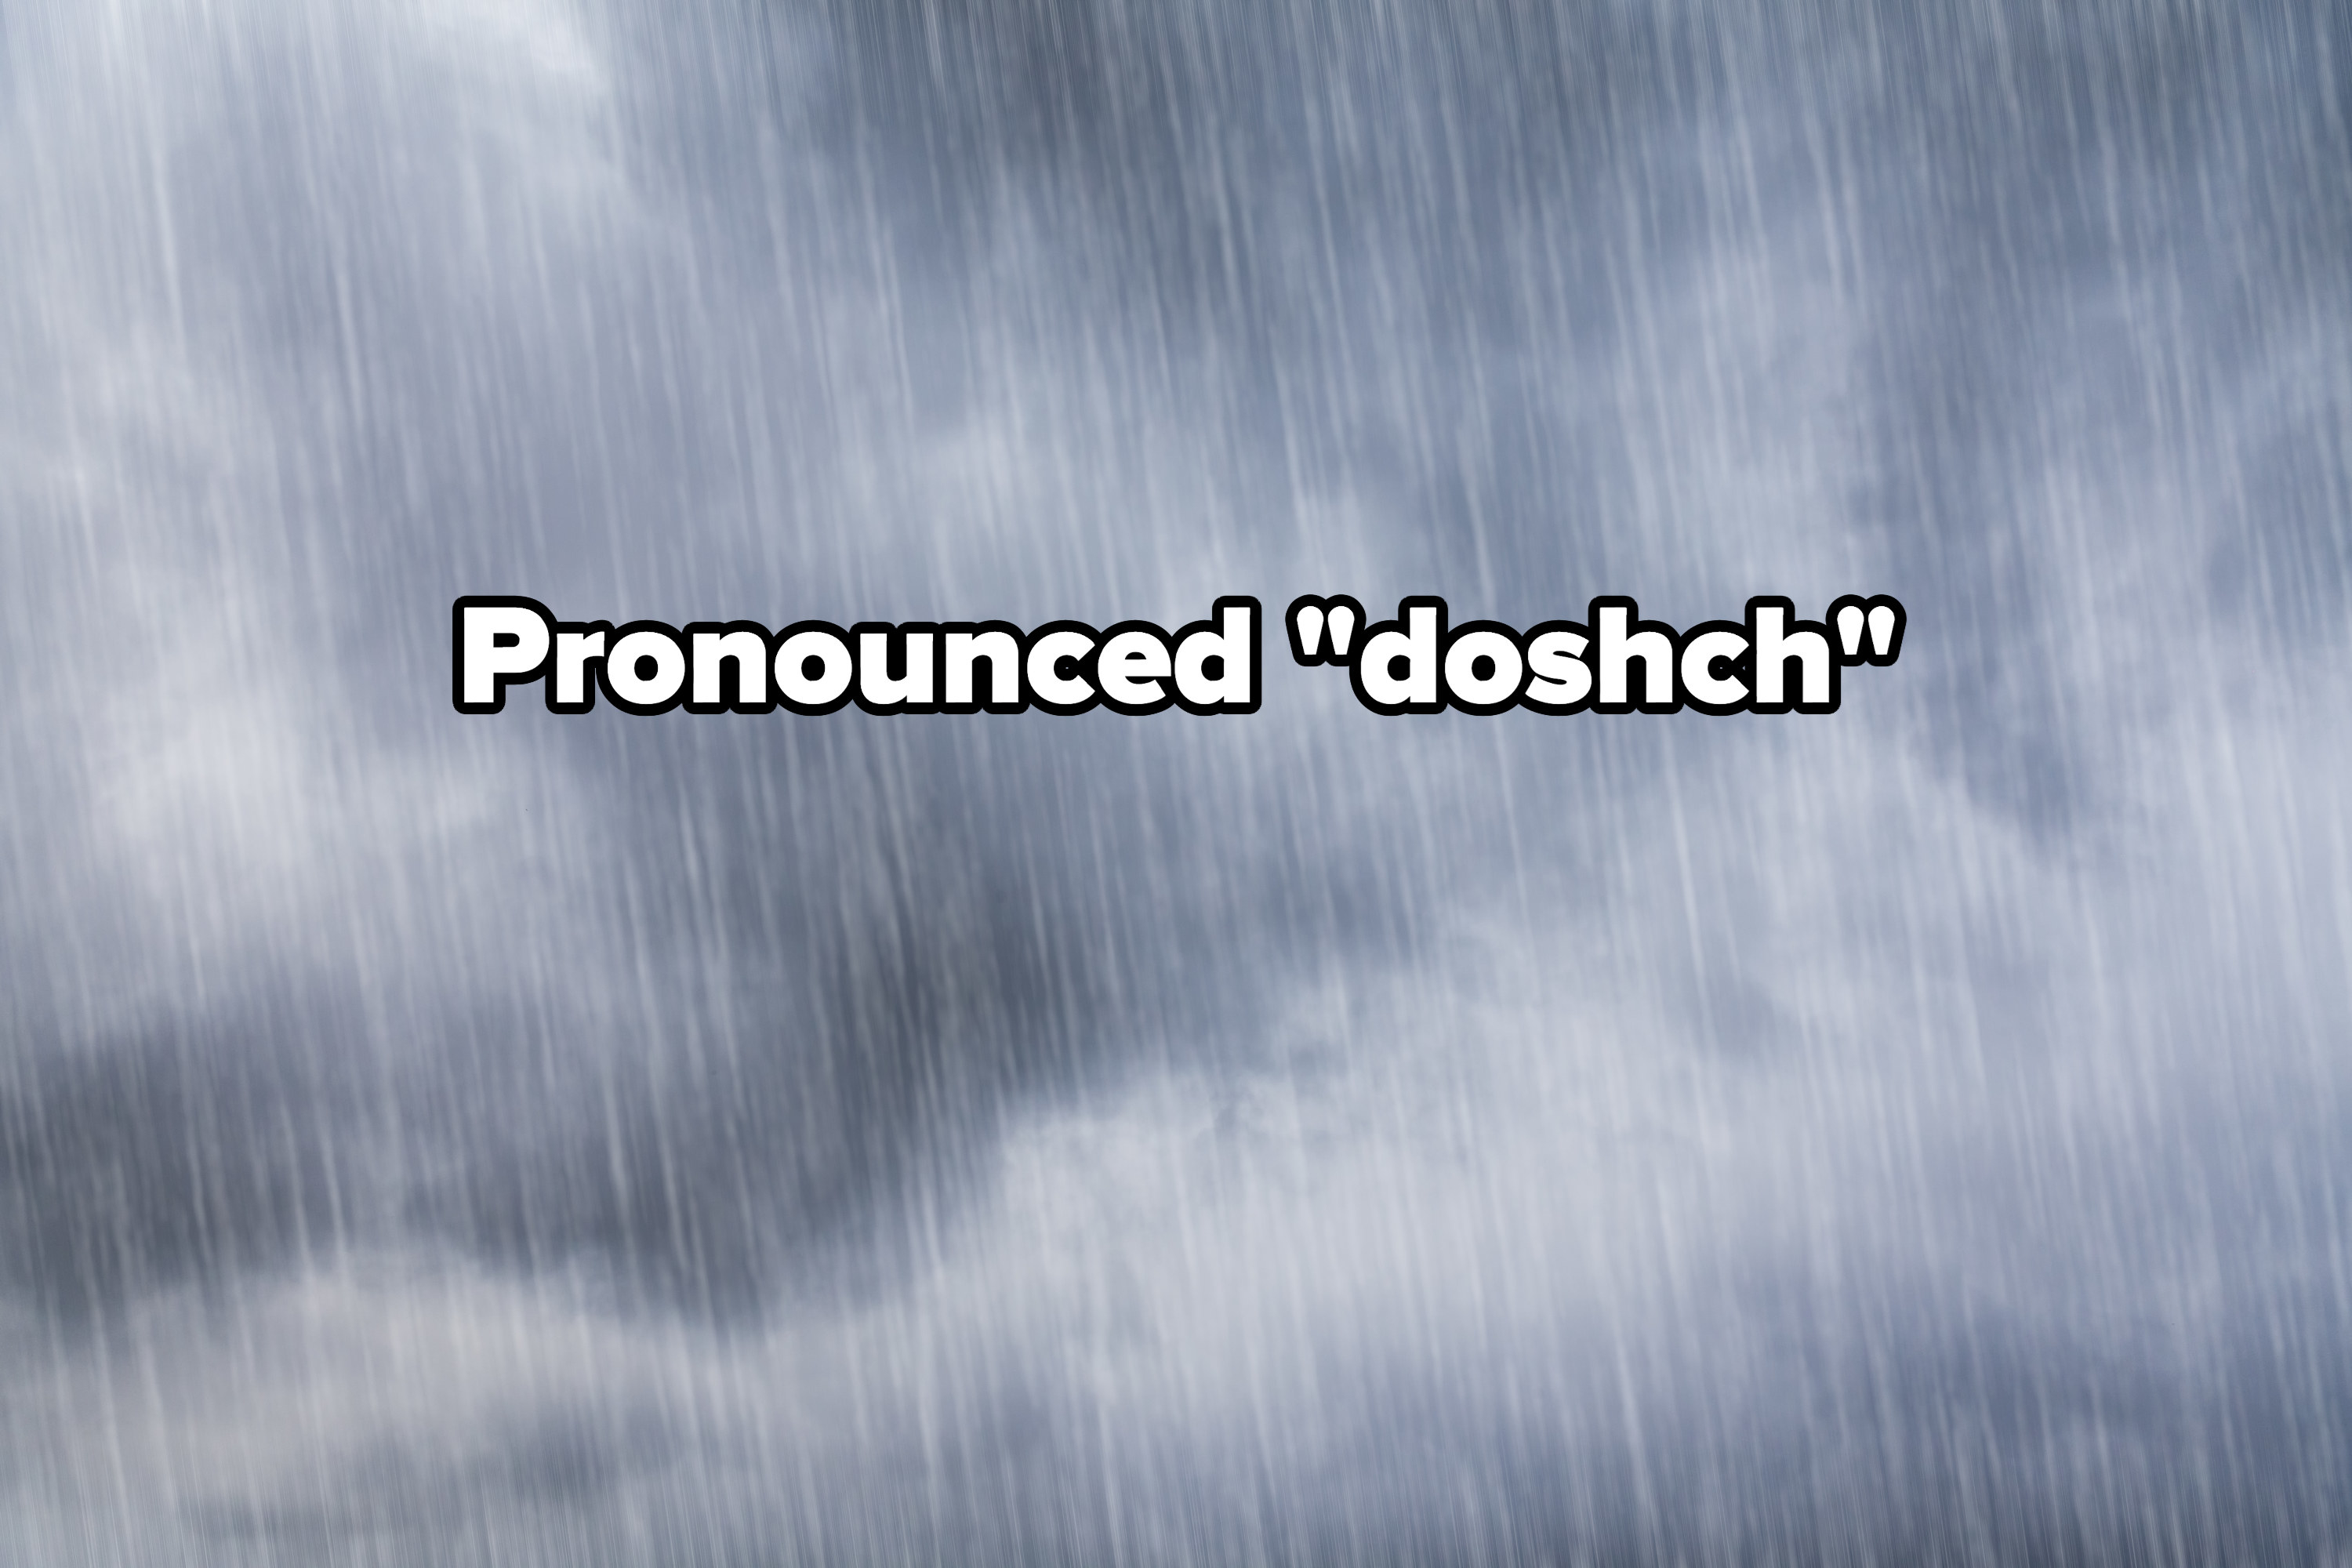 Pronounced doshch